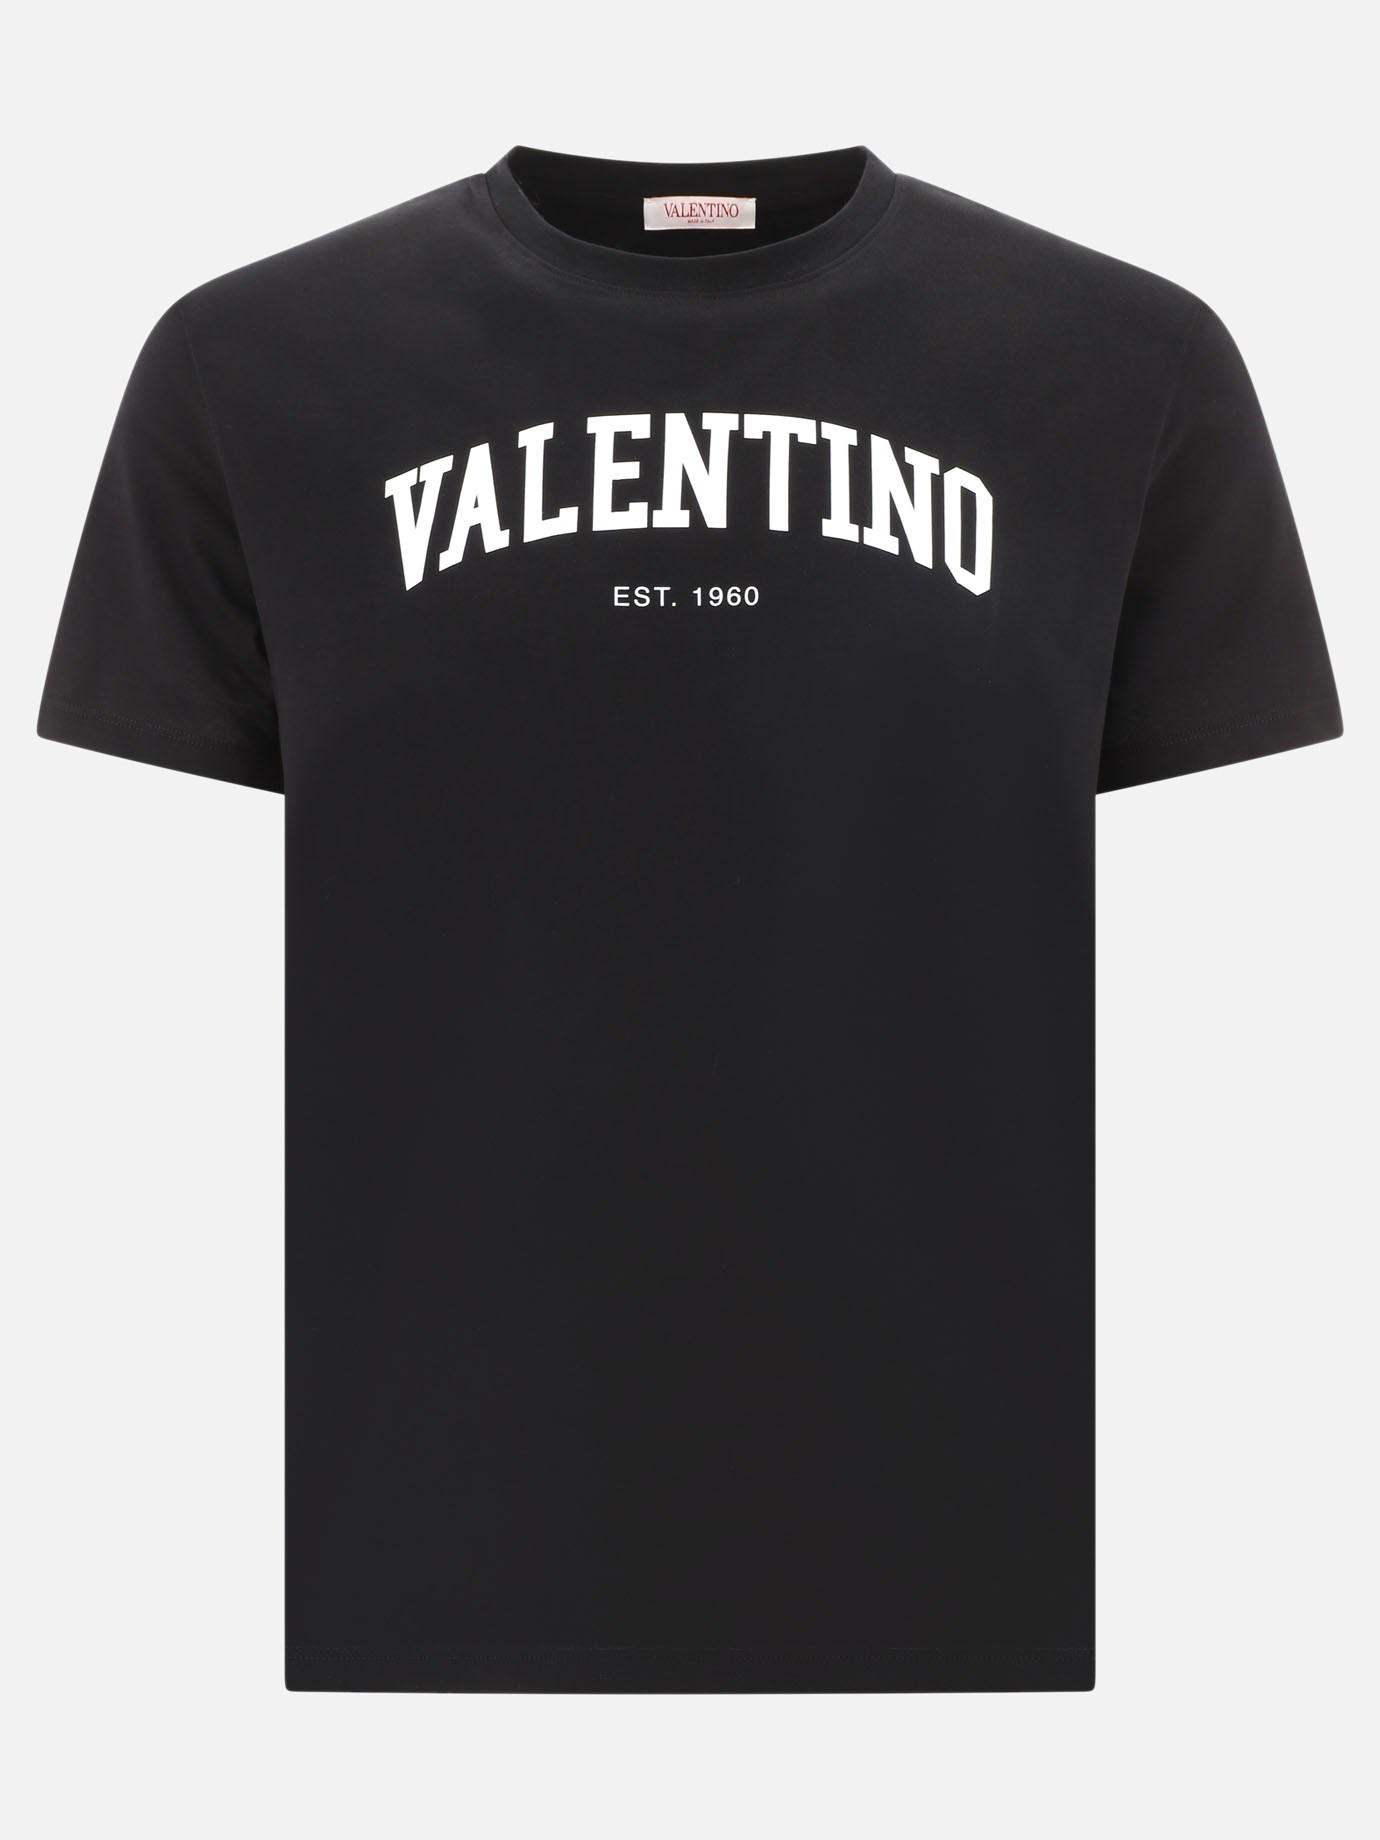 T-shirt  Valentino Est. 1960 by Valentino - 0